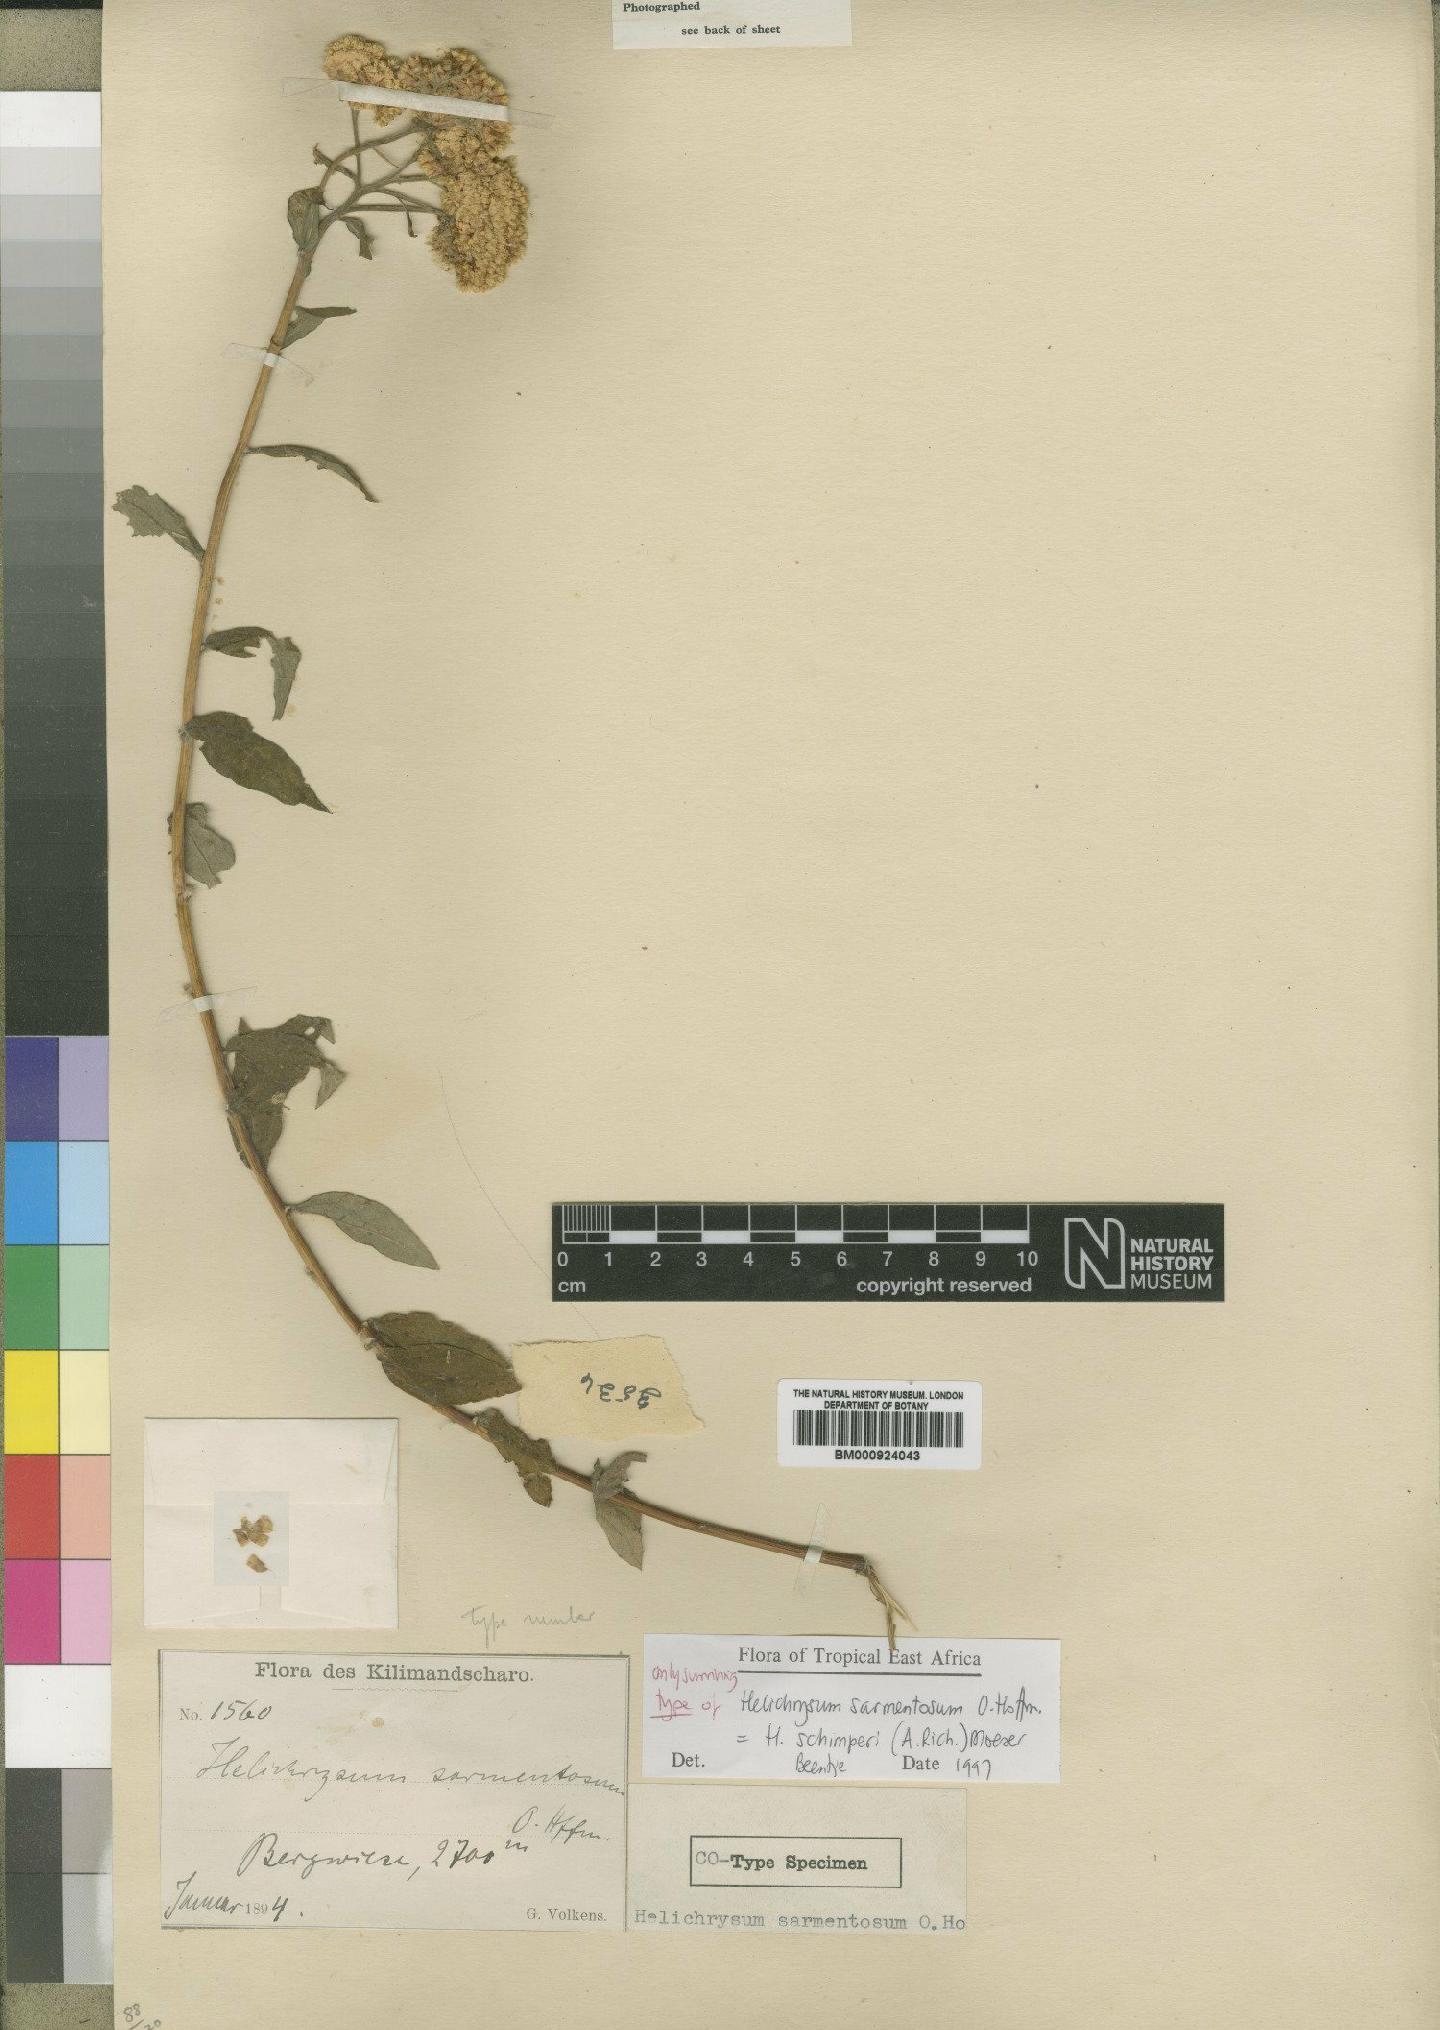 To NHMUK collection (Helichrysum sarmentosum O.Hoffm.; Type; NHMUK:ecatalogue:4528811)